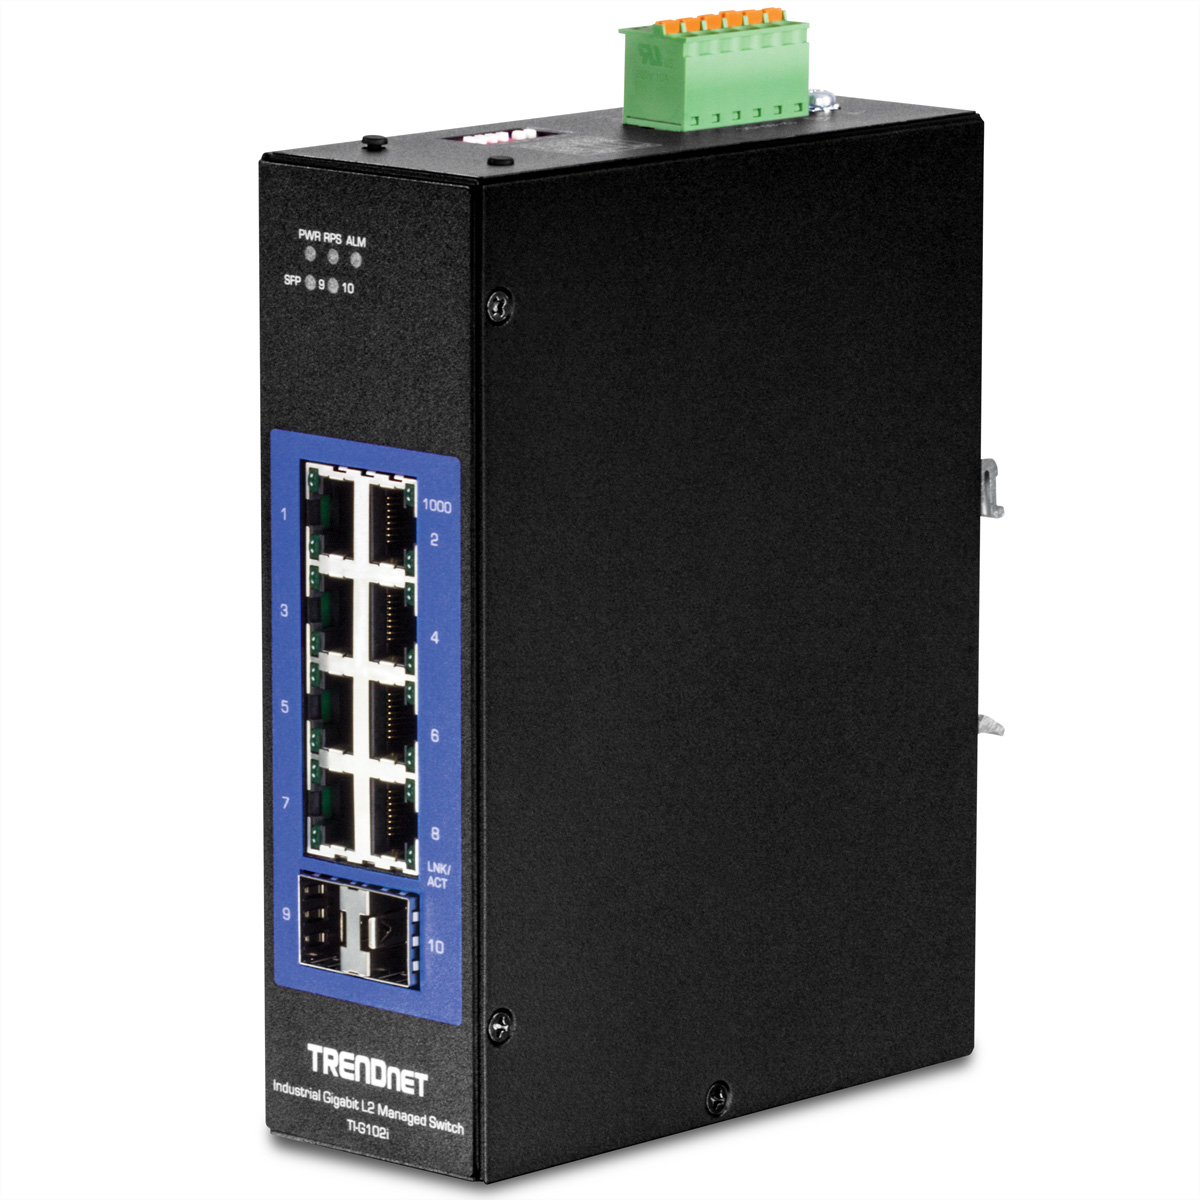 TRENDNET TI-G102i DIN-Rail Switch Gigabit Ethernet Gigabit Industrial L2 10-Port Switch